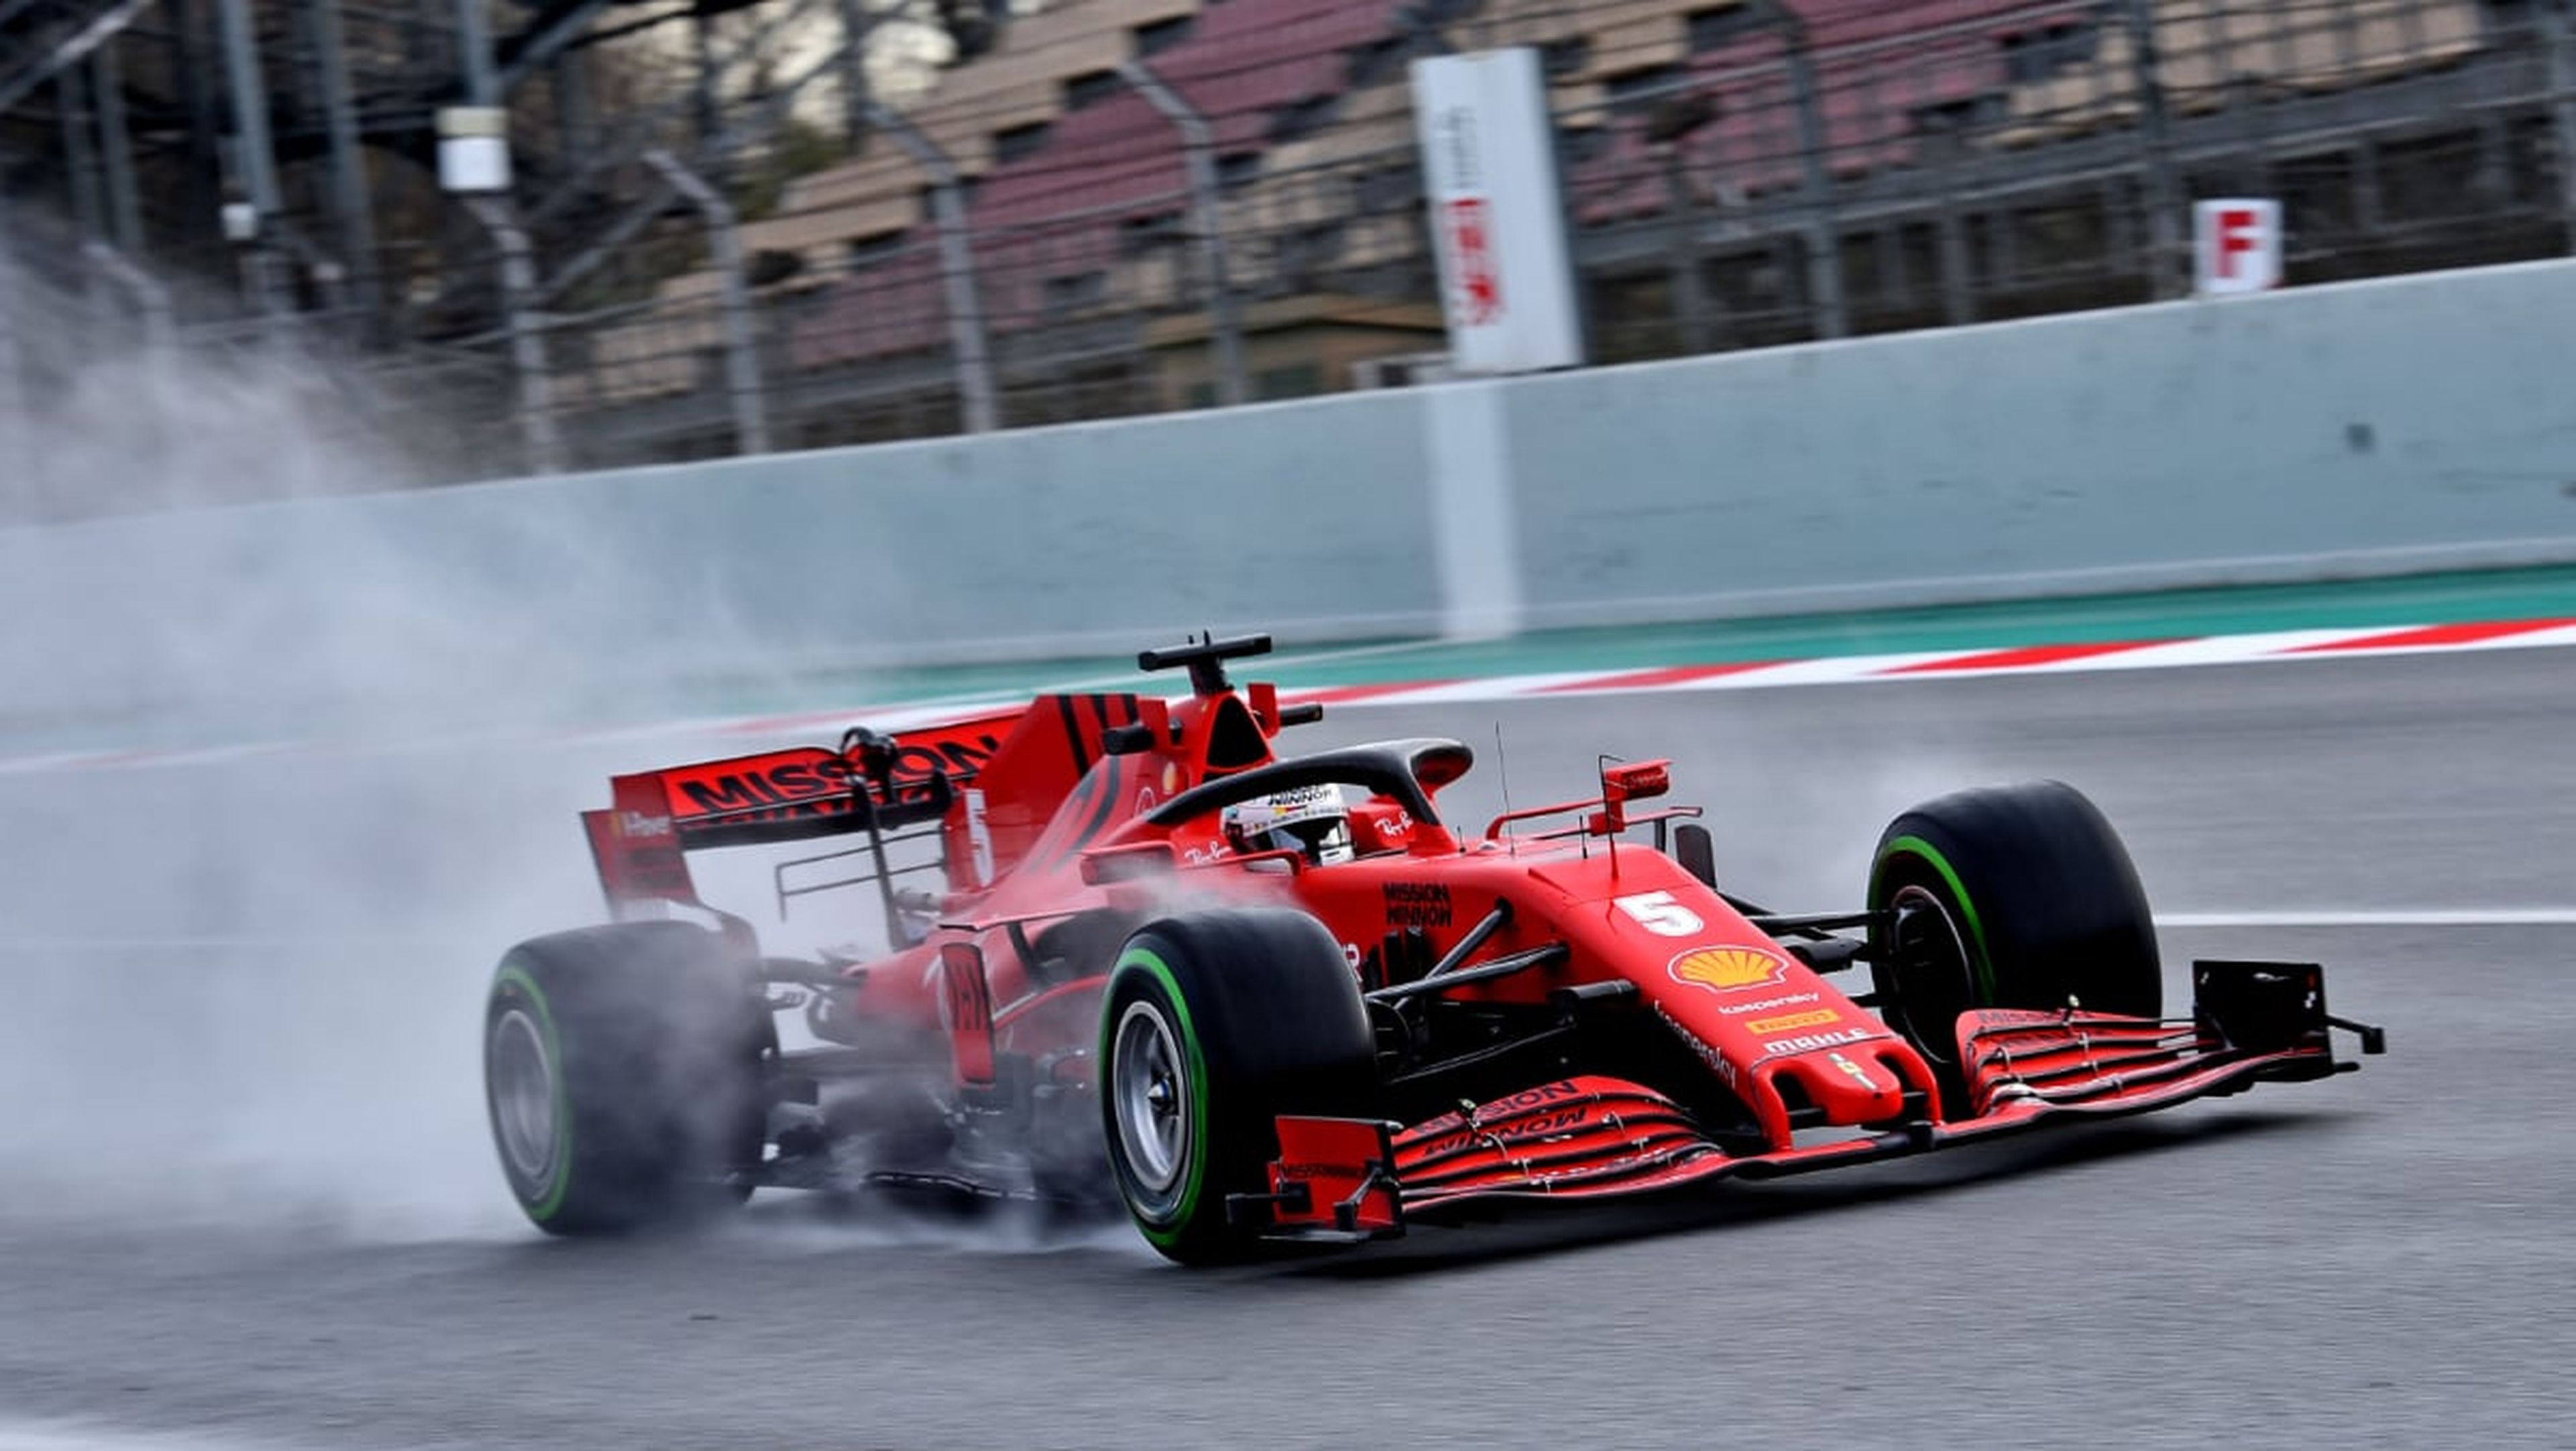 Vettel Ferrari F1 2020